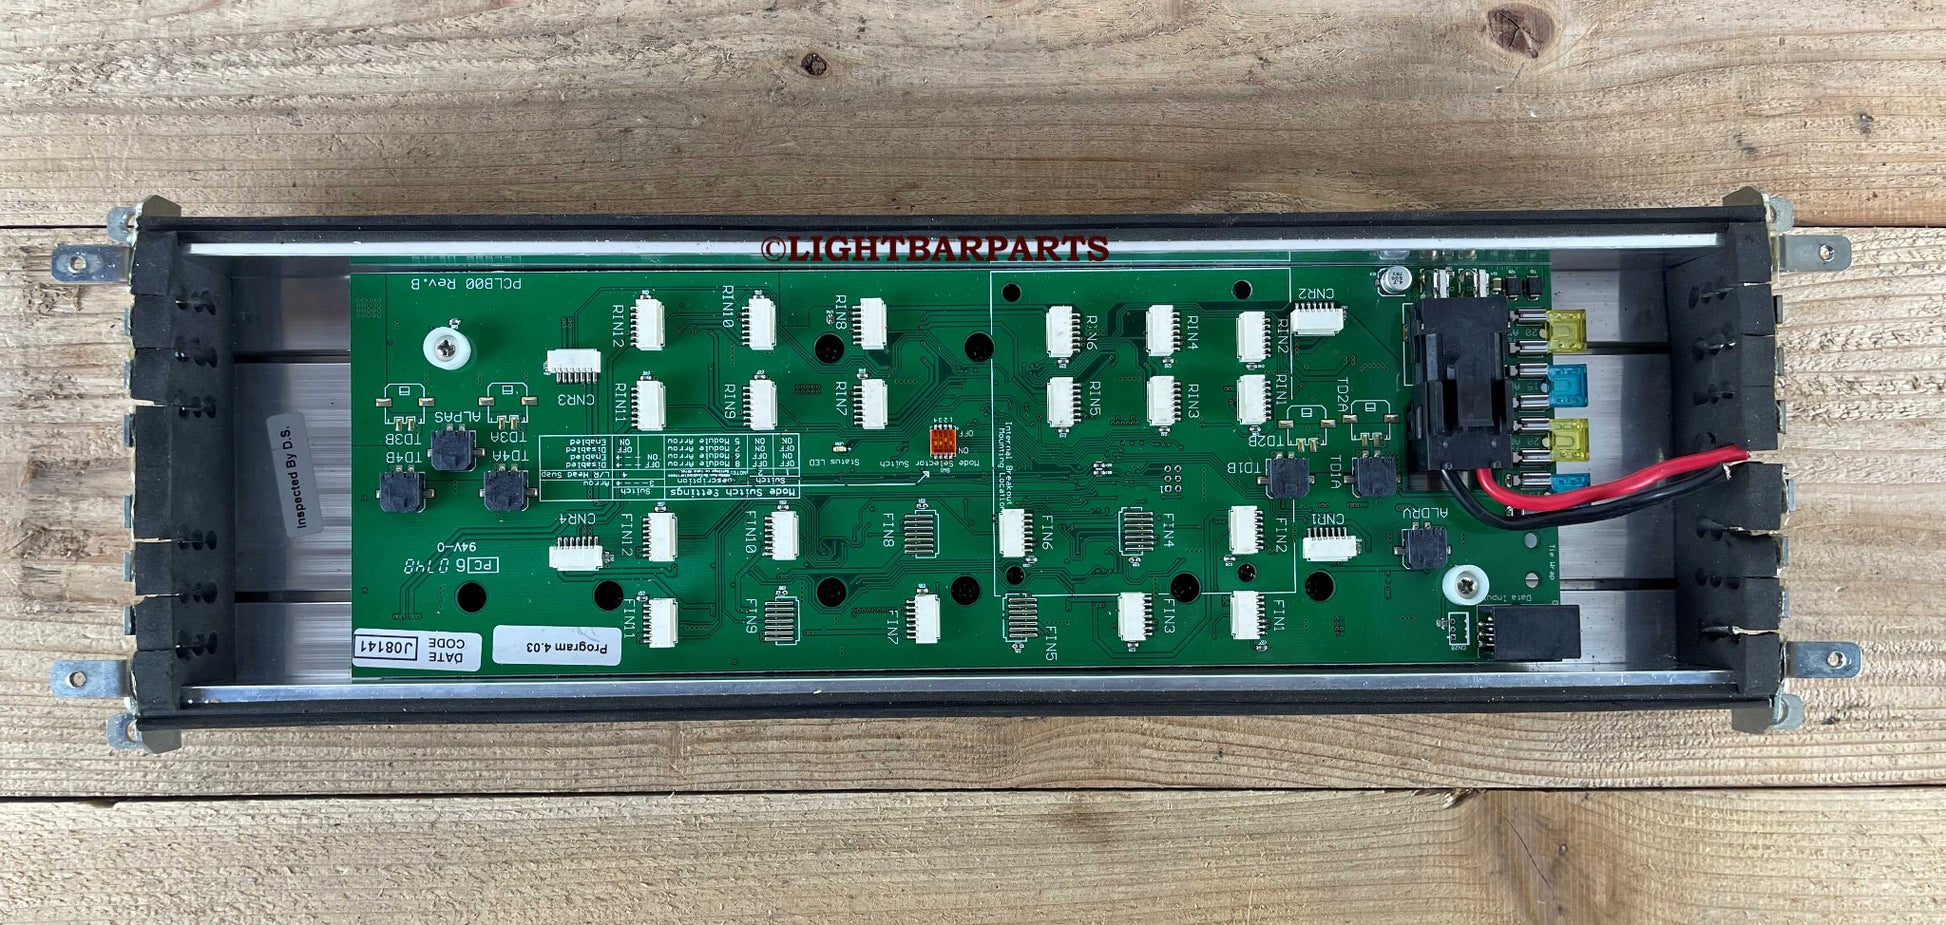 SoundOff ETL5000 Lightbar - I/O Control Mother Board with Power Connector